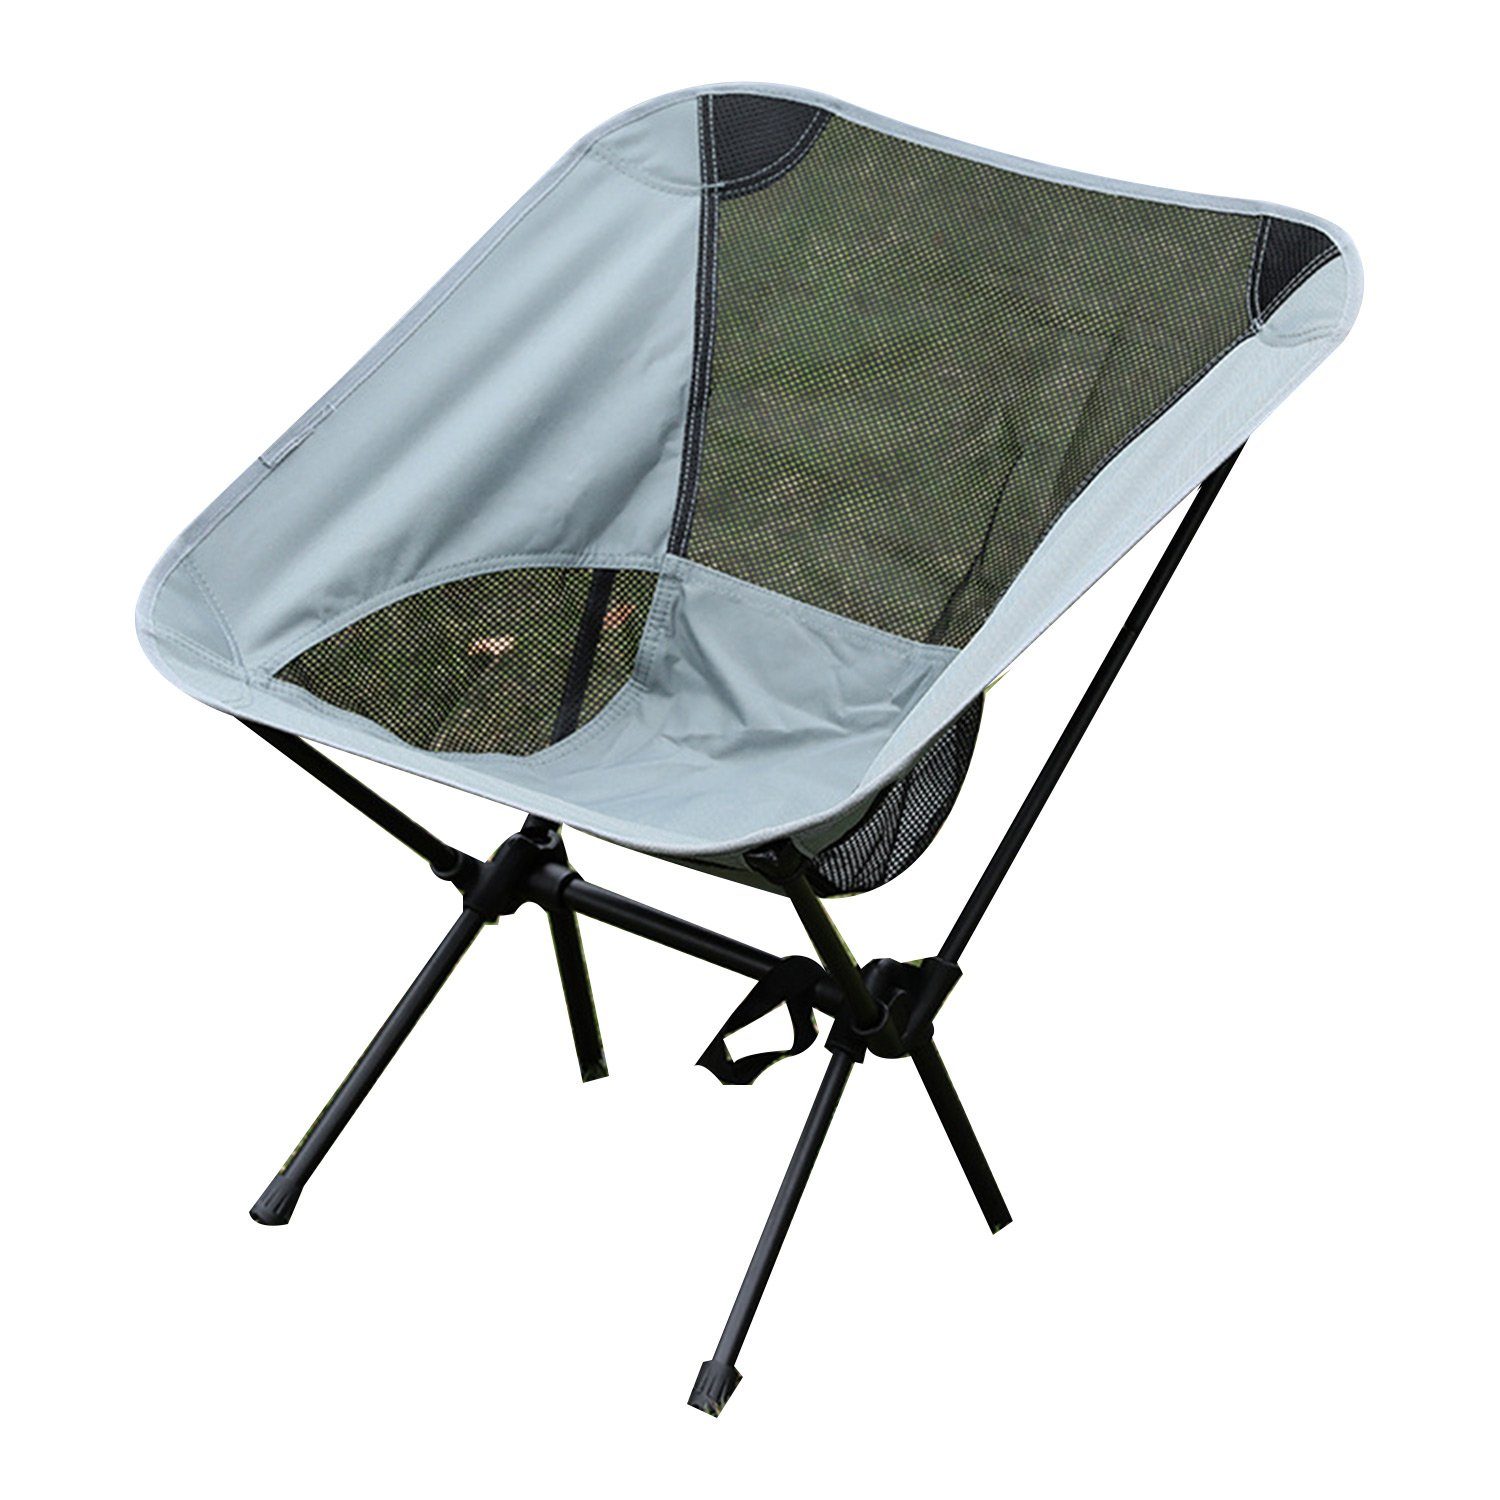 MAGICSHE Klappstuhl Camping Stuhl, ultra leichter Stuhl im Freien, Reise Stuhl, Faltbar, Tragfähigkeit 120 kg, Picknick, Outdoor grau